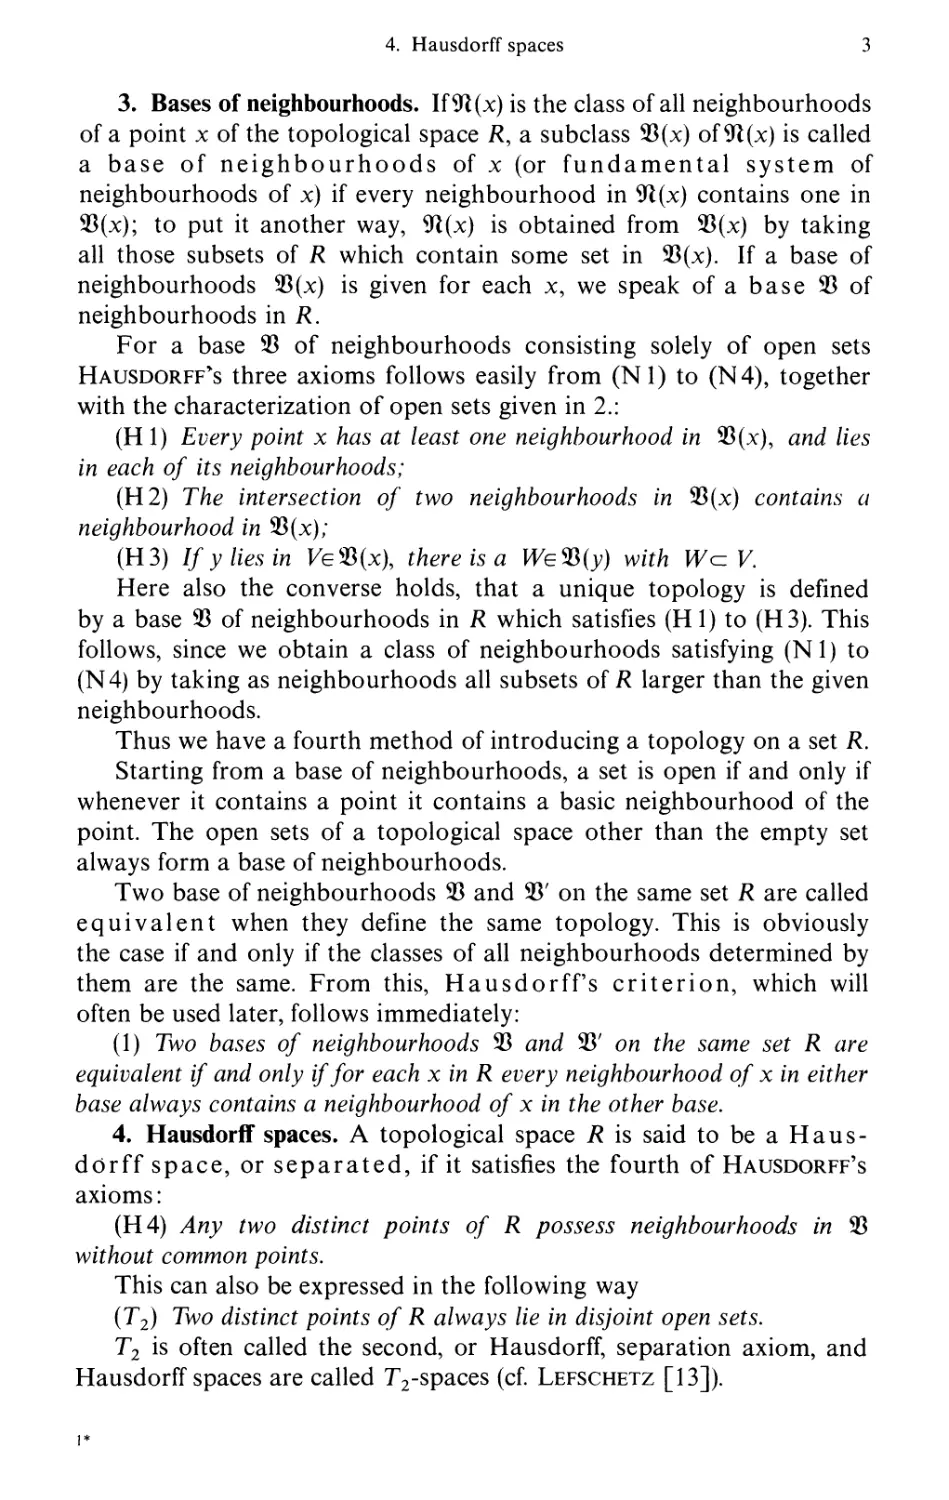 3. Bases of neighbourhoods
4. Hausdorff spaces